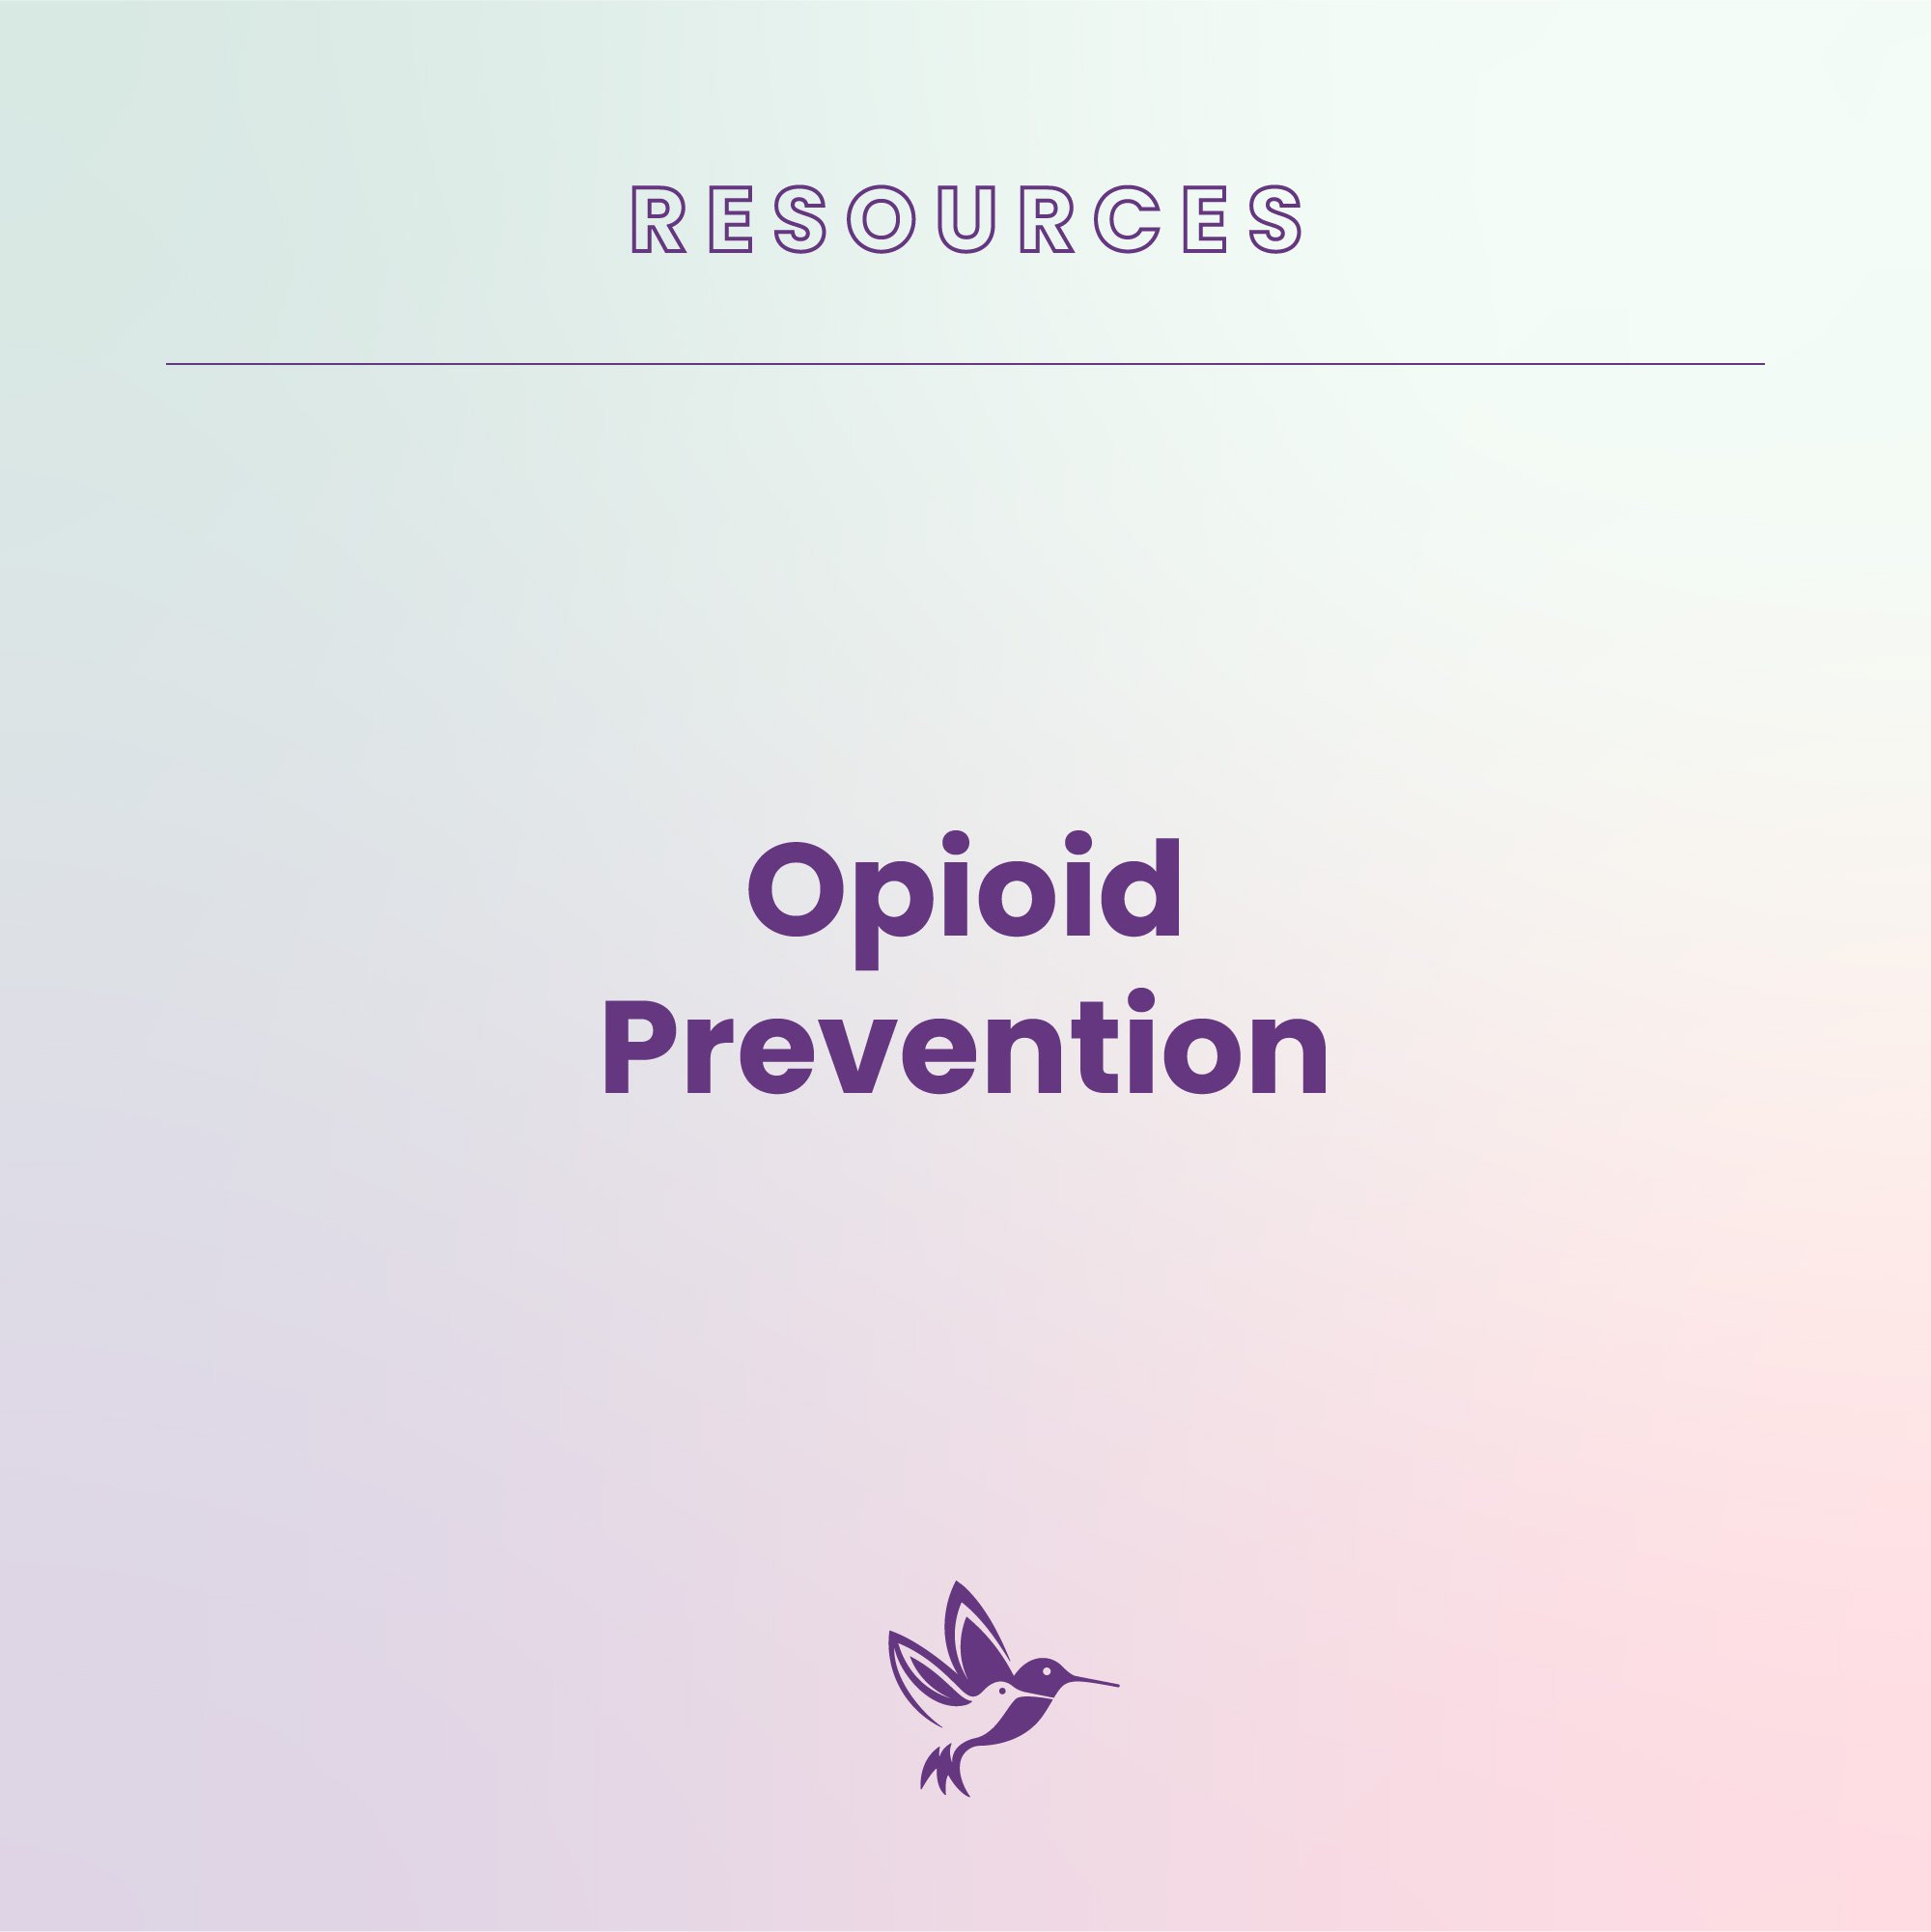 Opioid Prevention (Copy)